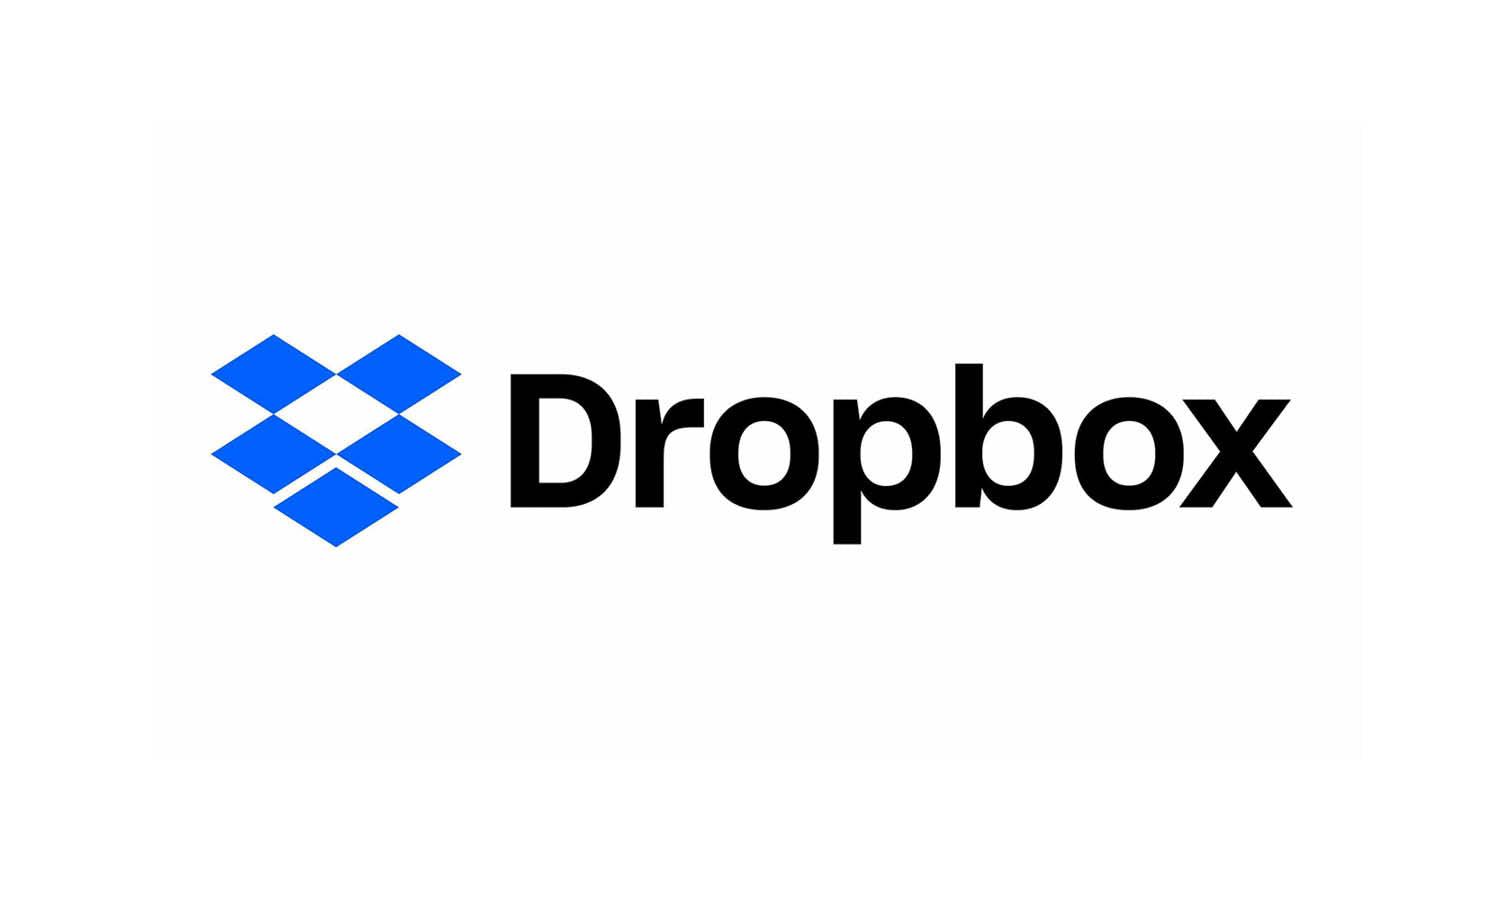 Dropbox Logo Design: History & Evolution - Kreafolk